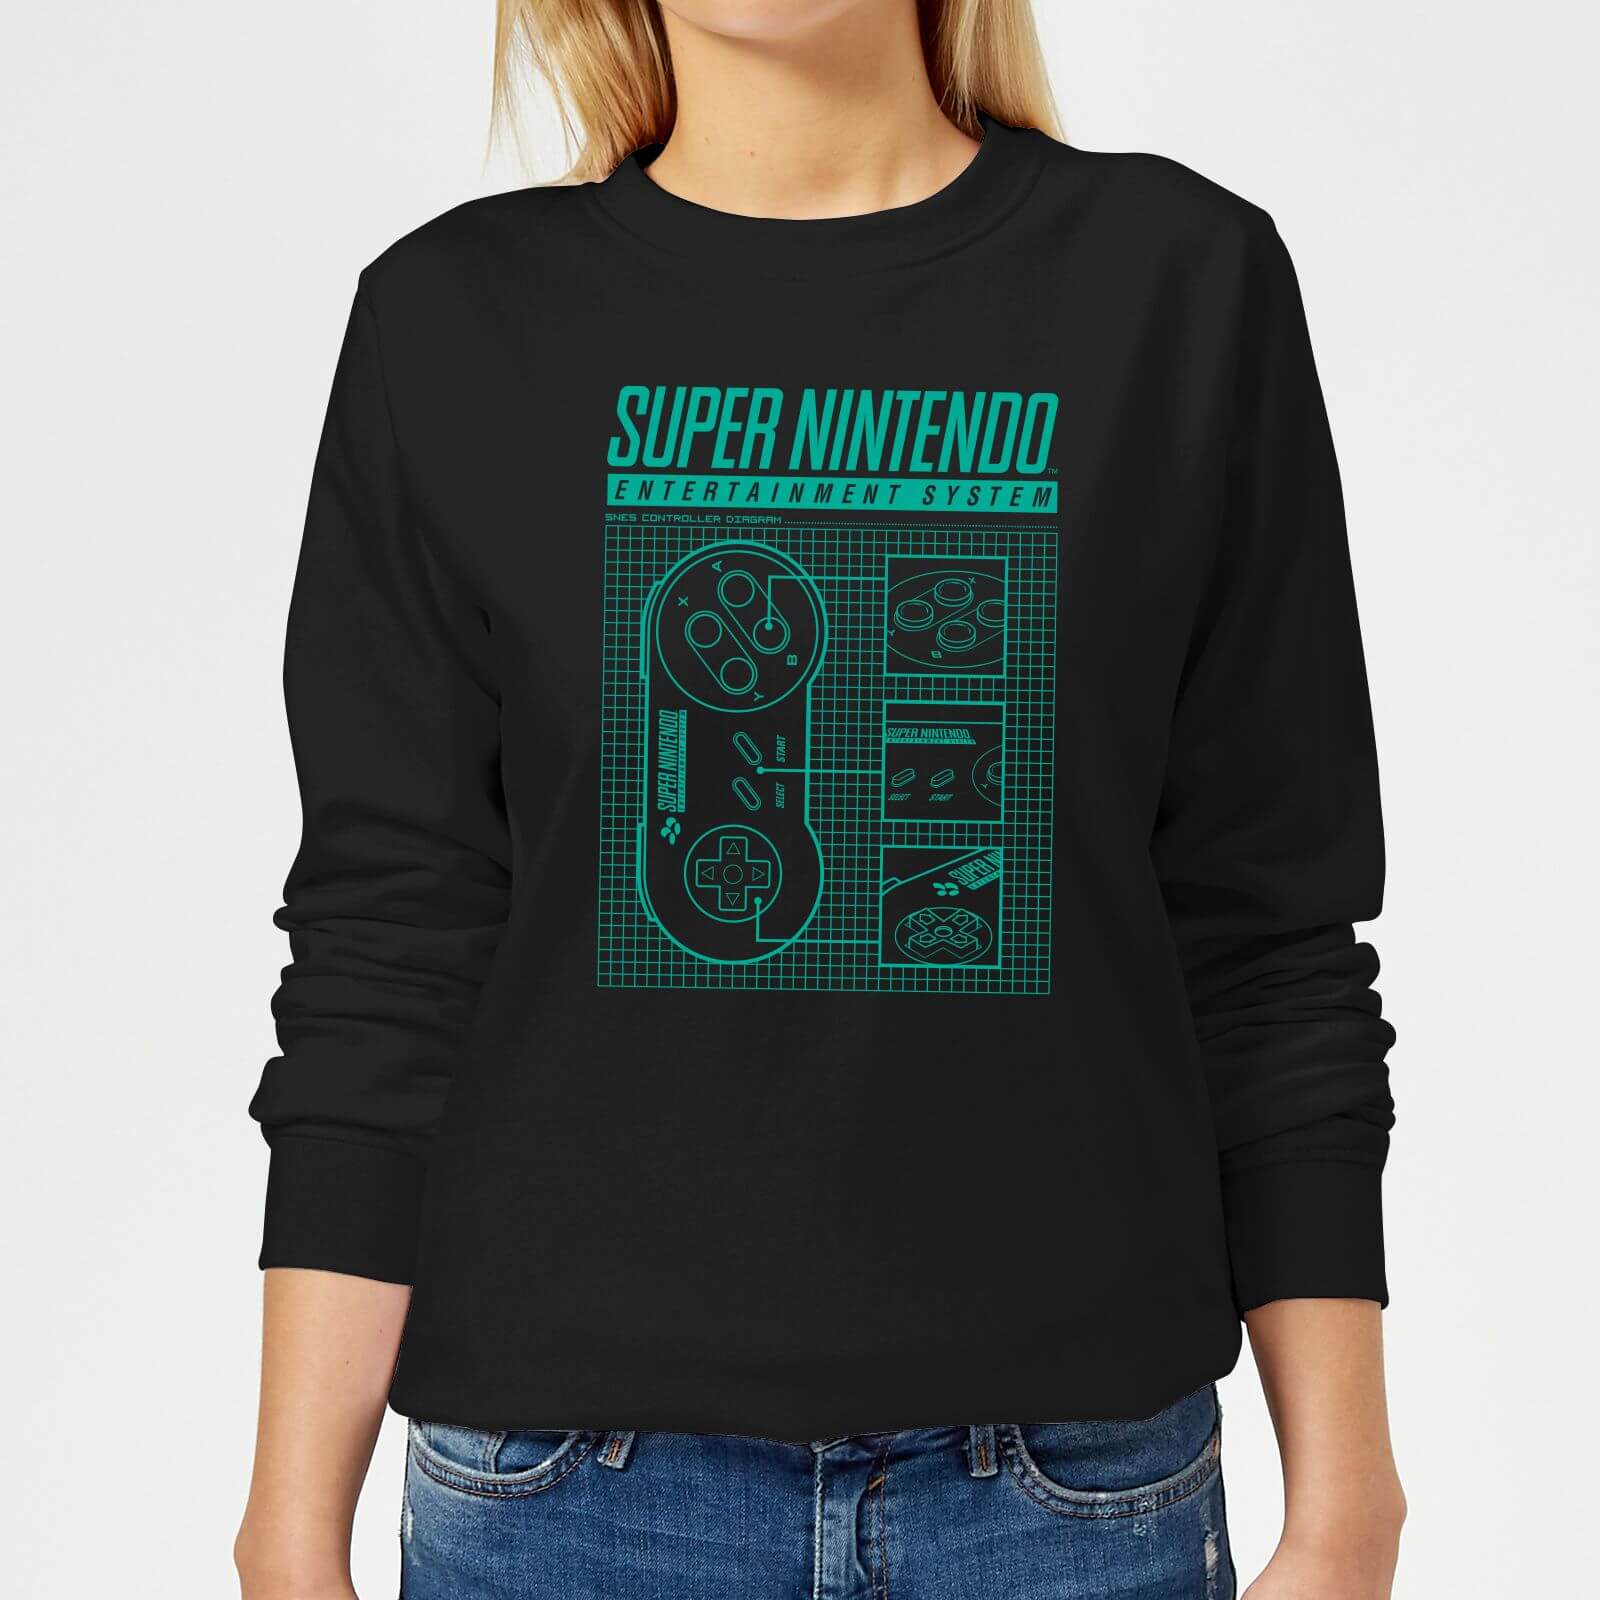 Nintendo Super Nintendo Entertainment System Women's Sweatshirt - Black - S - Black